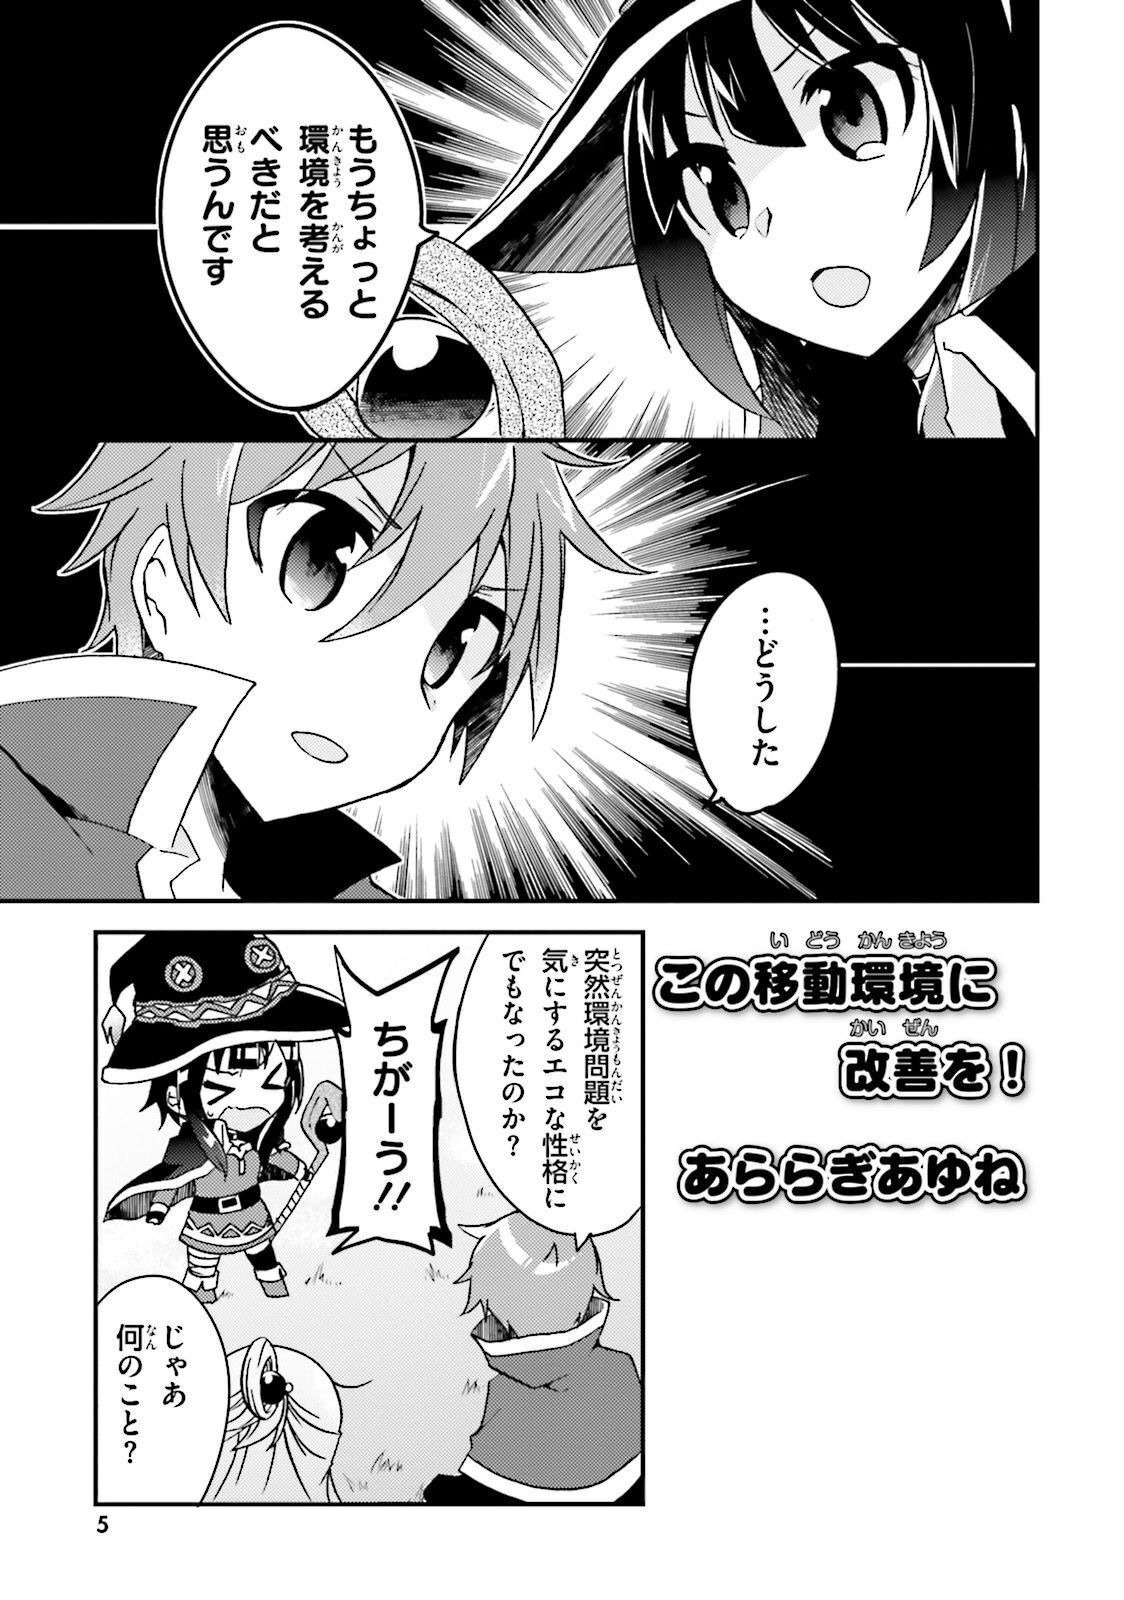 Kazuma's Assessment (Konosuba!Megumin Anthology) : r/manga